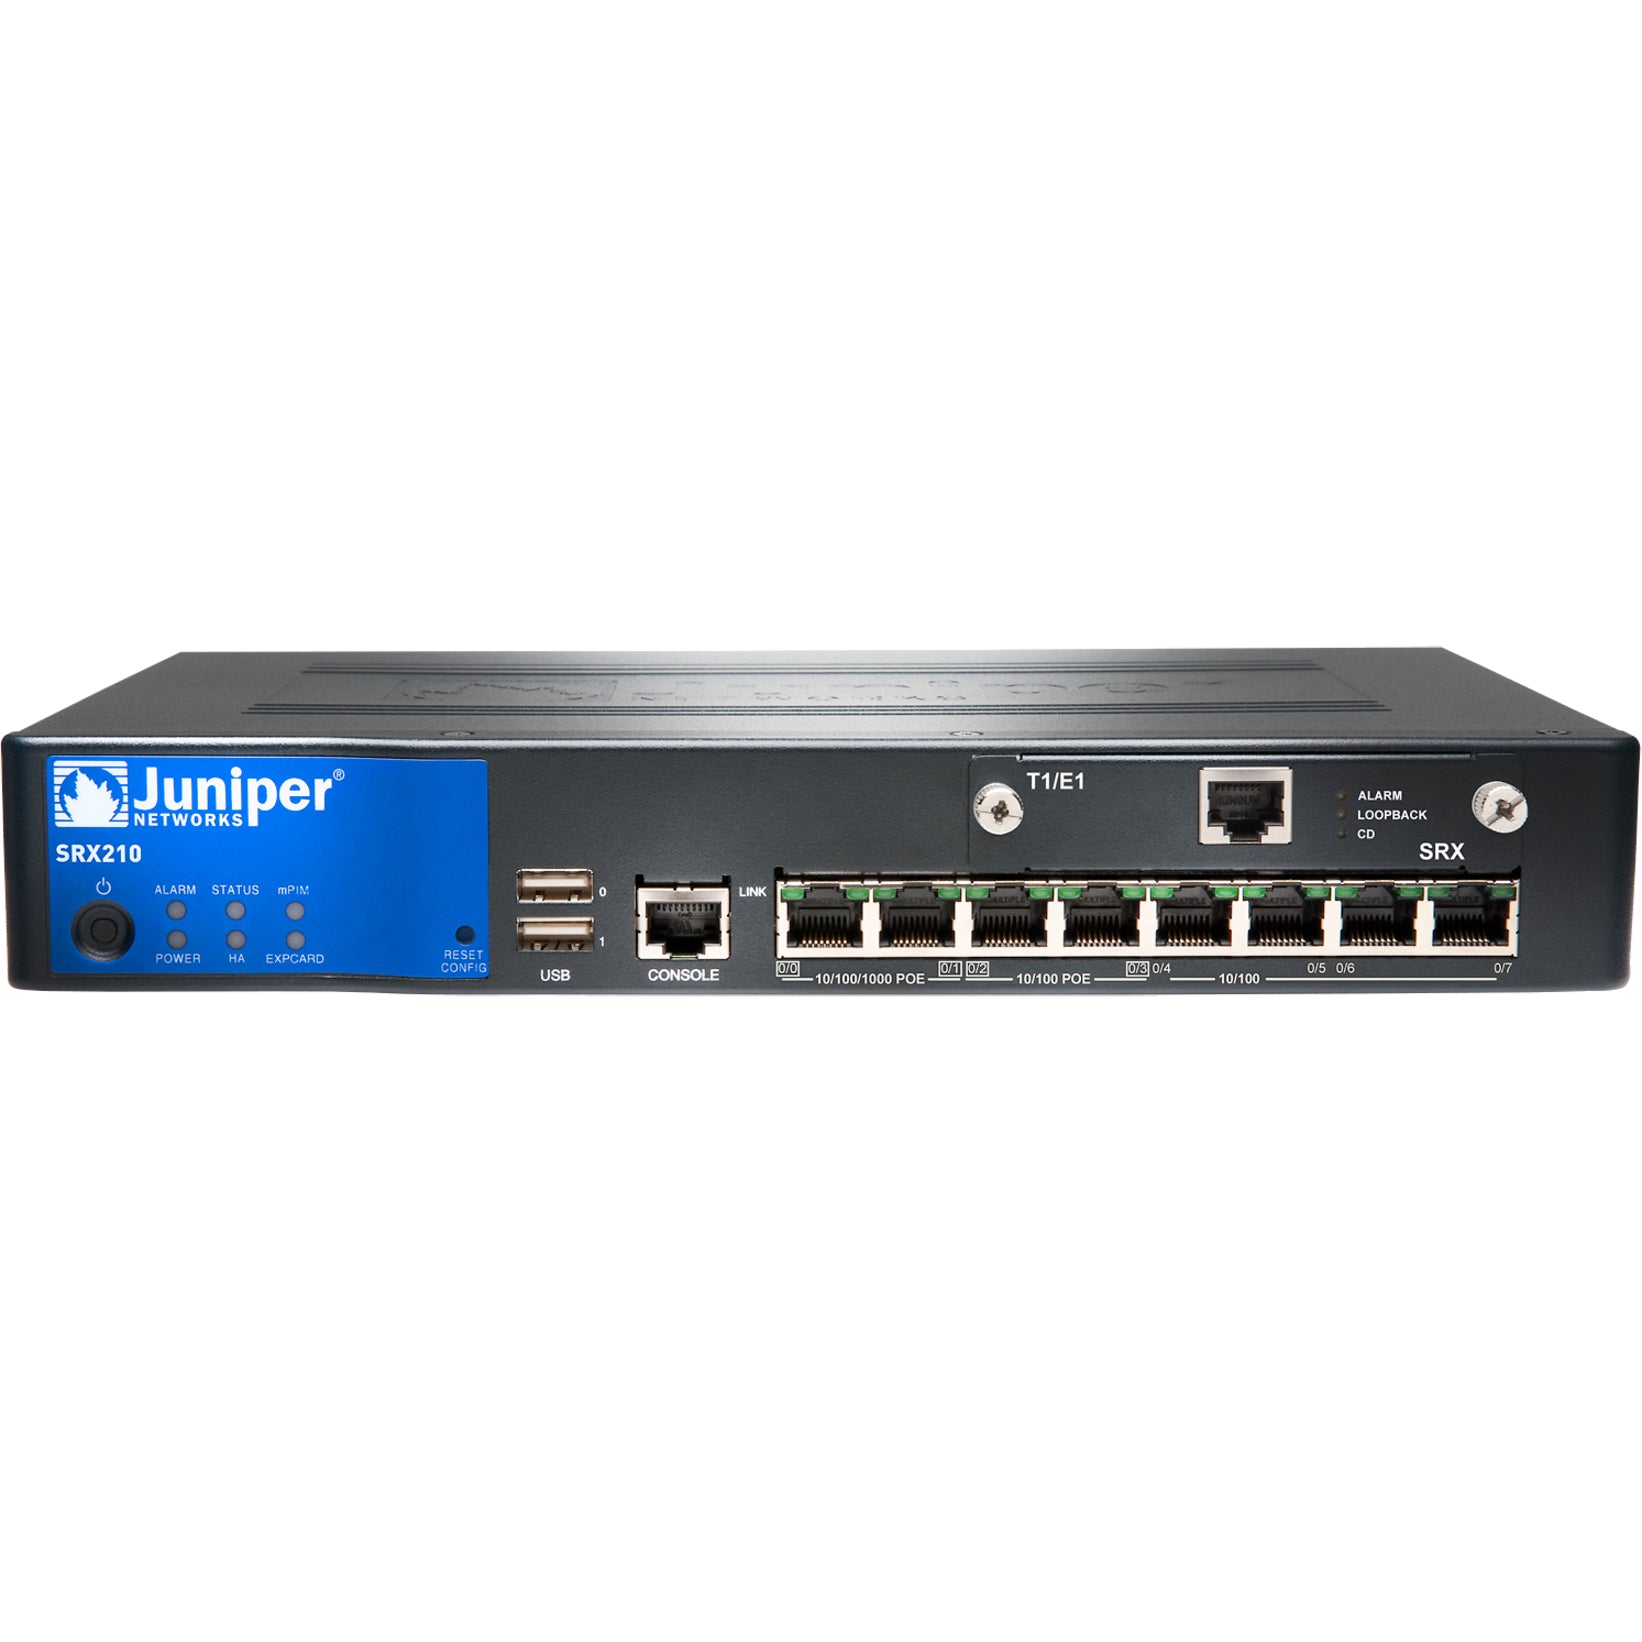 Juniper SRX210 Services Gateway Power Over Ethernet (SRX210HE2-POE)